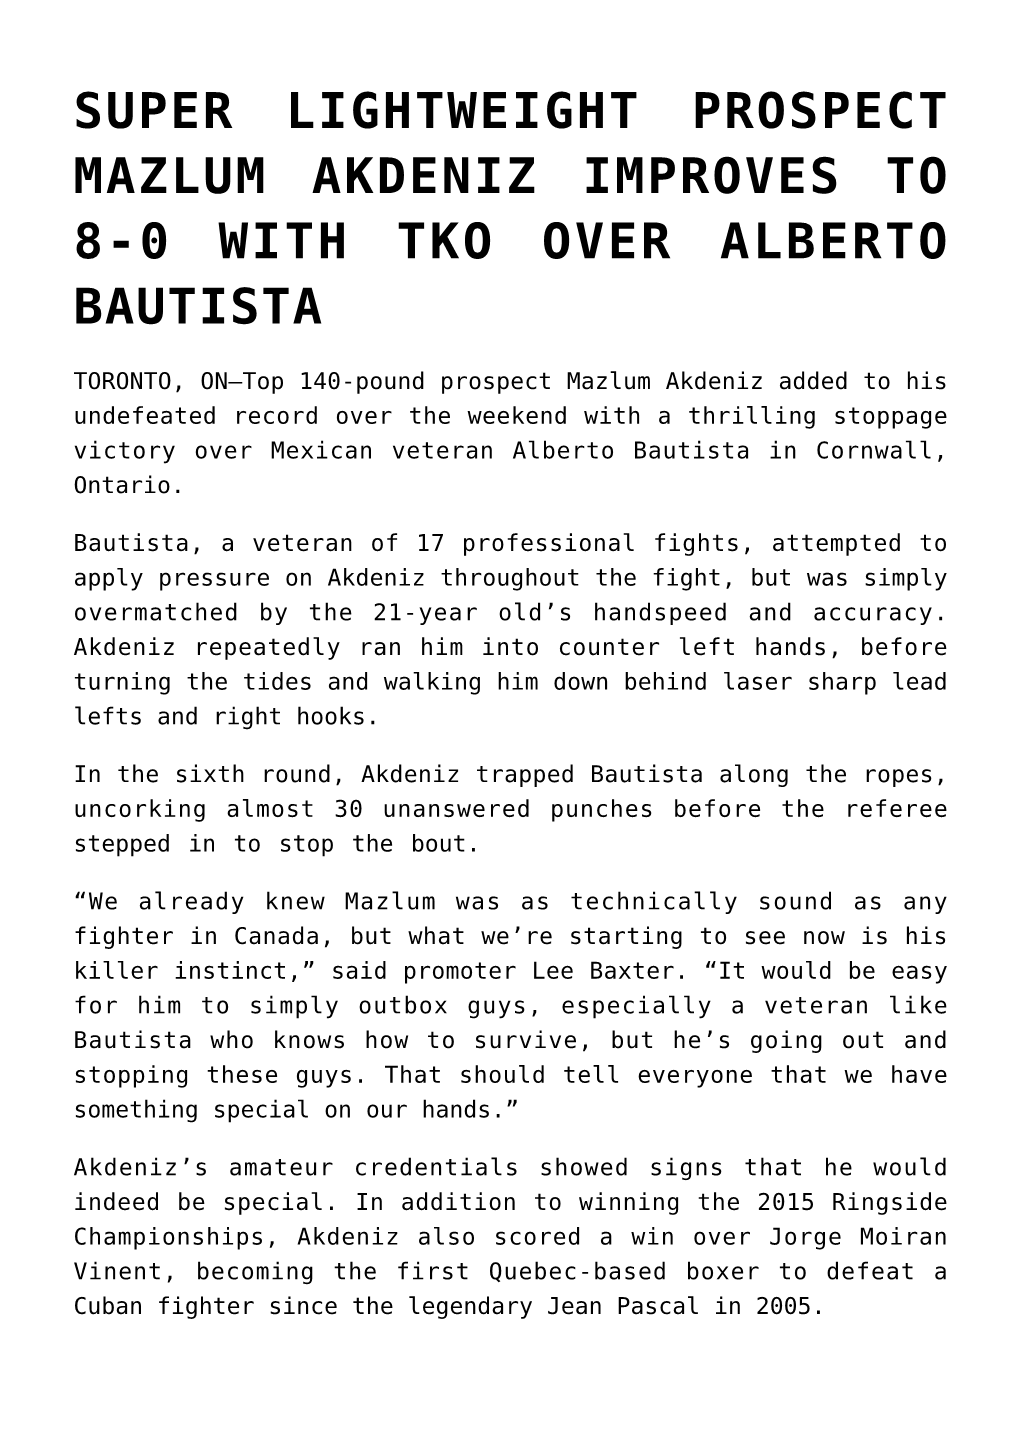 Super Lightweight Prospect Mazlum Akdeniz Improves to 8-0 with Tko Over Alberto Bautista